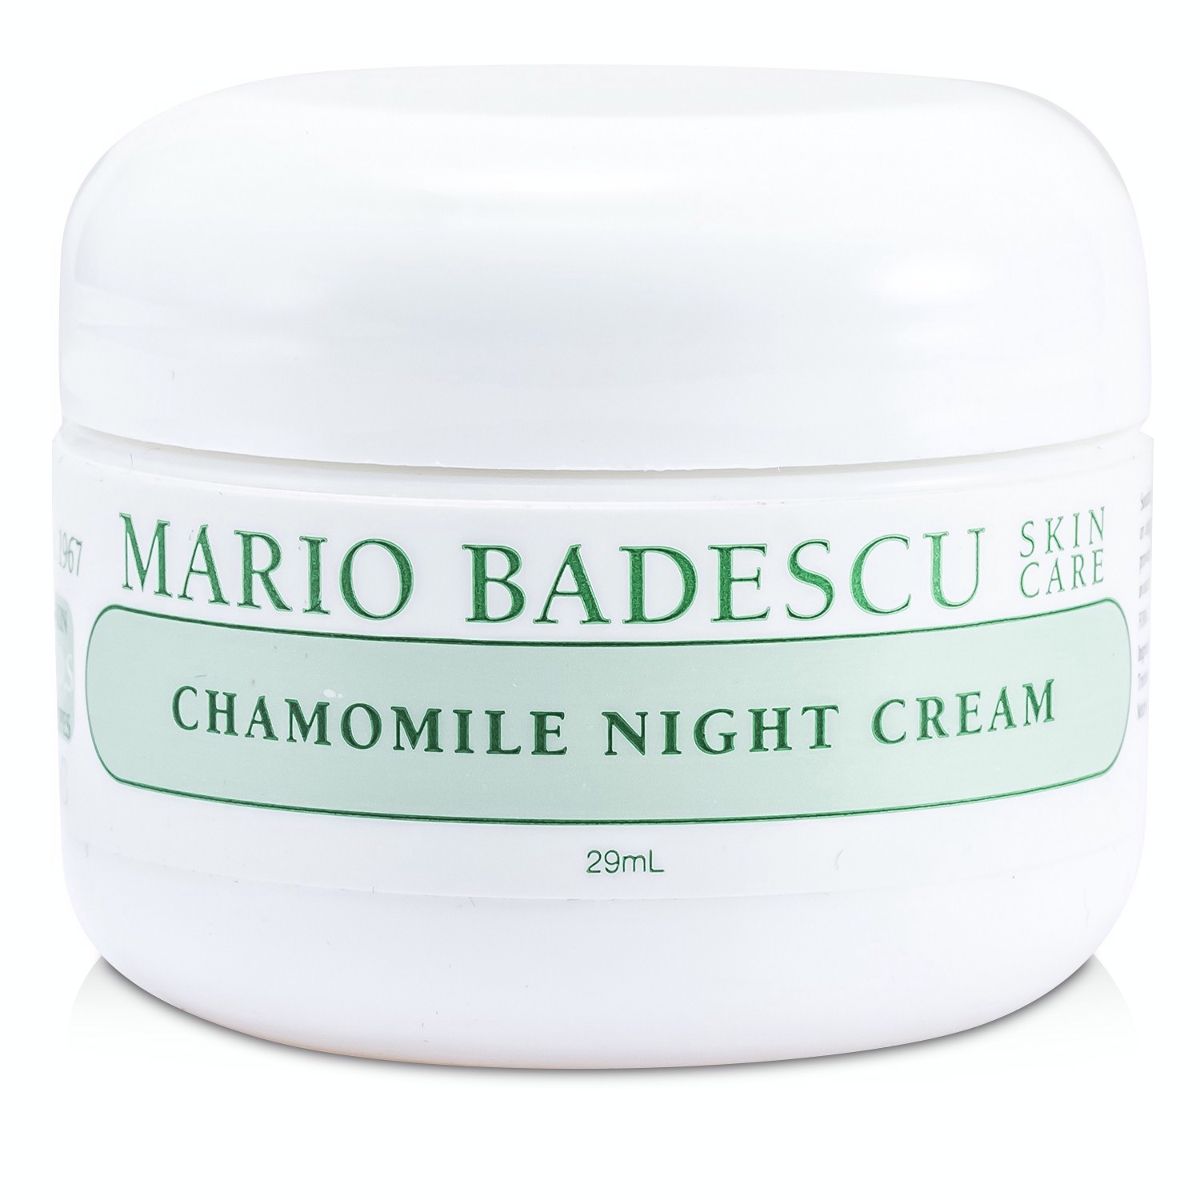 Chamomile Night Cream - For Combination/ Dry/ Sensitive Skin Types Mario Badescu Image